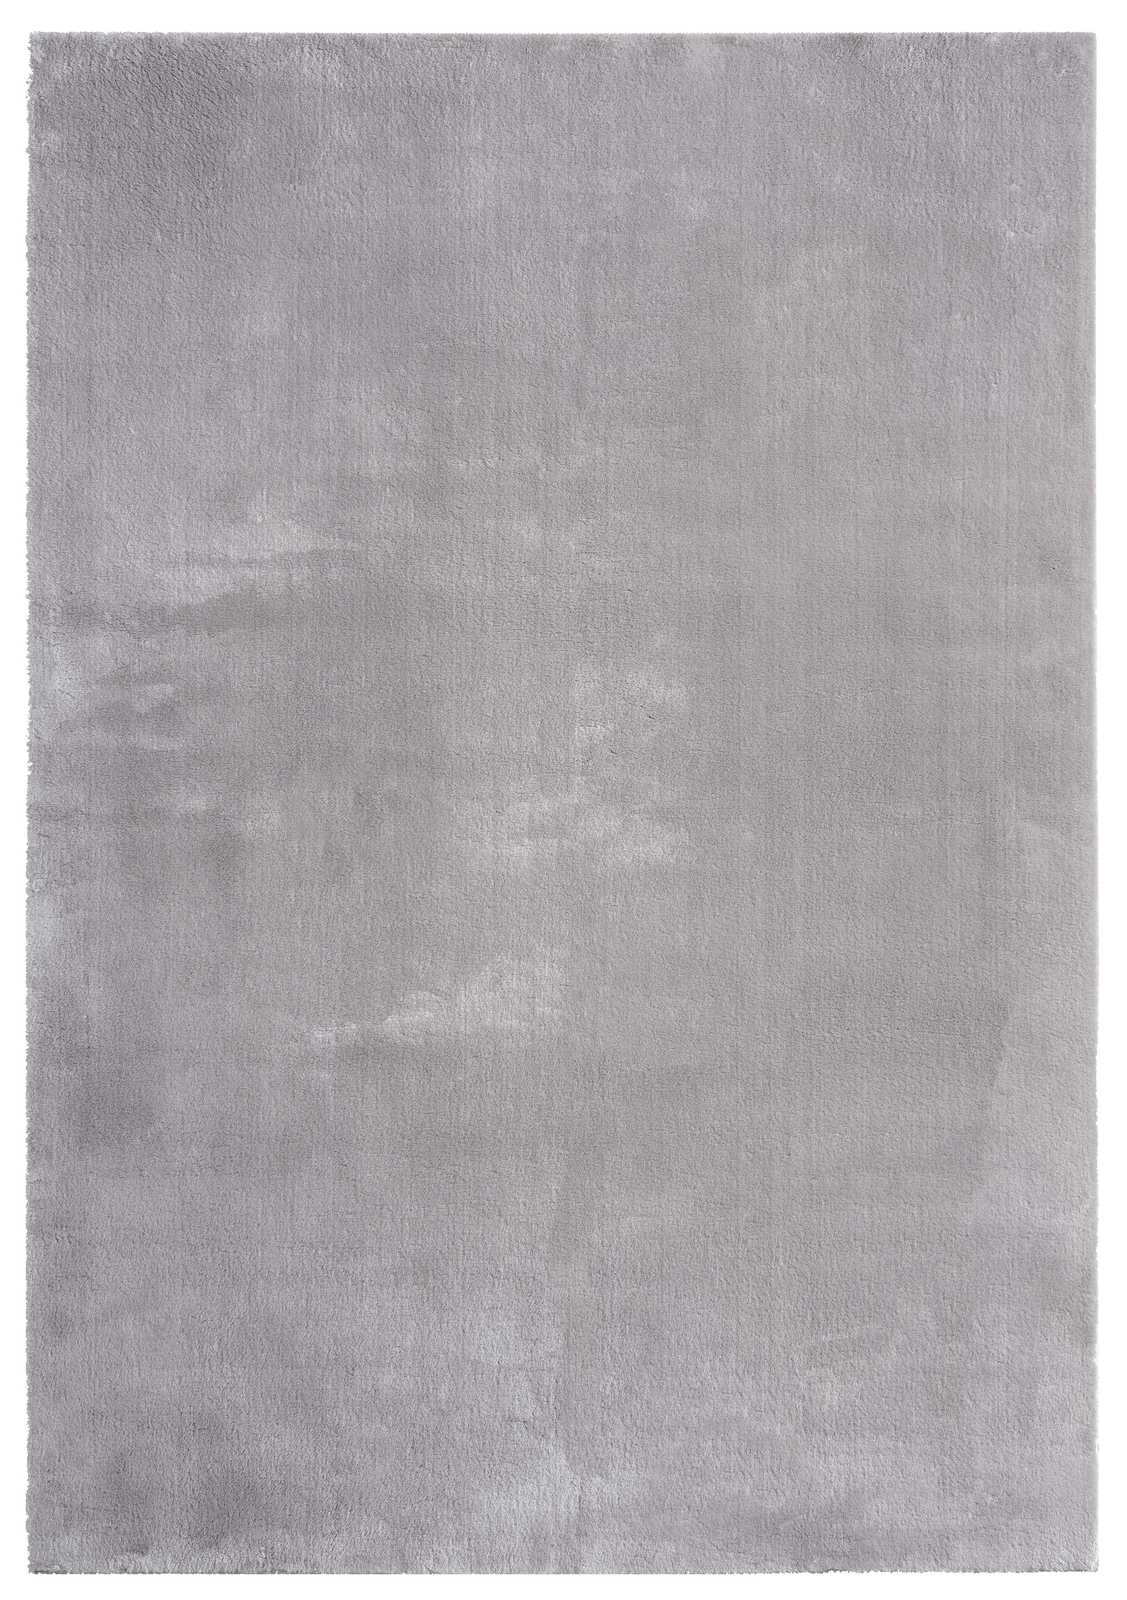             Feiner Hochflor Teppich in Grau – 110 x 60 cm
        